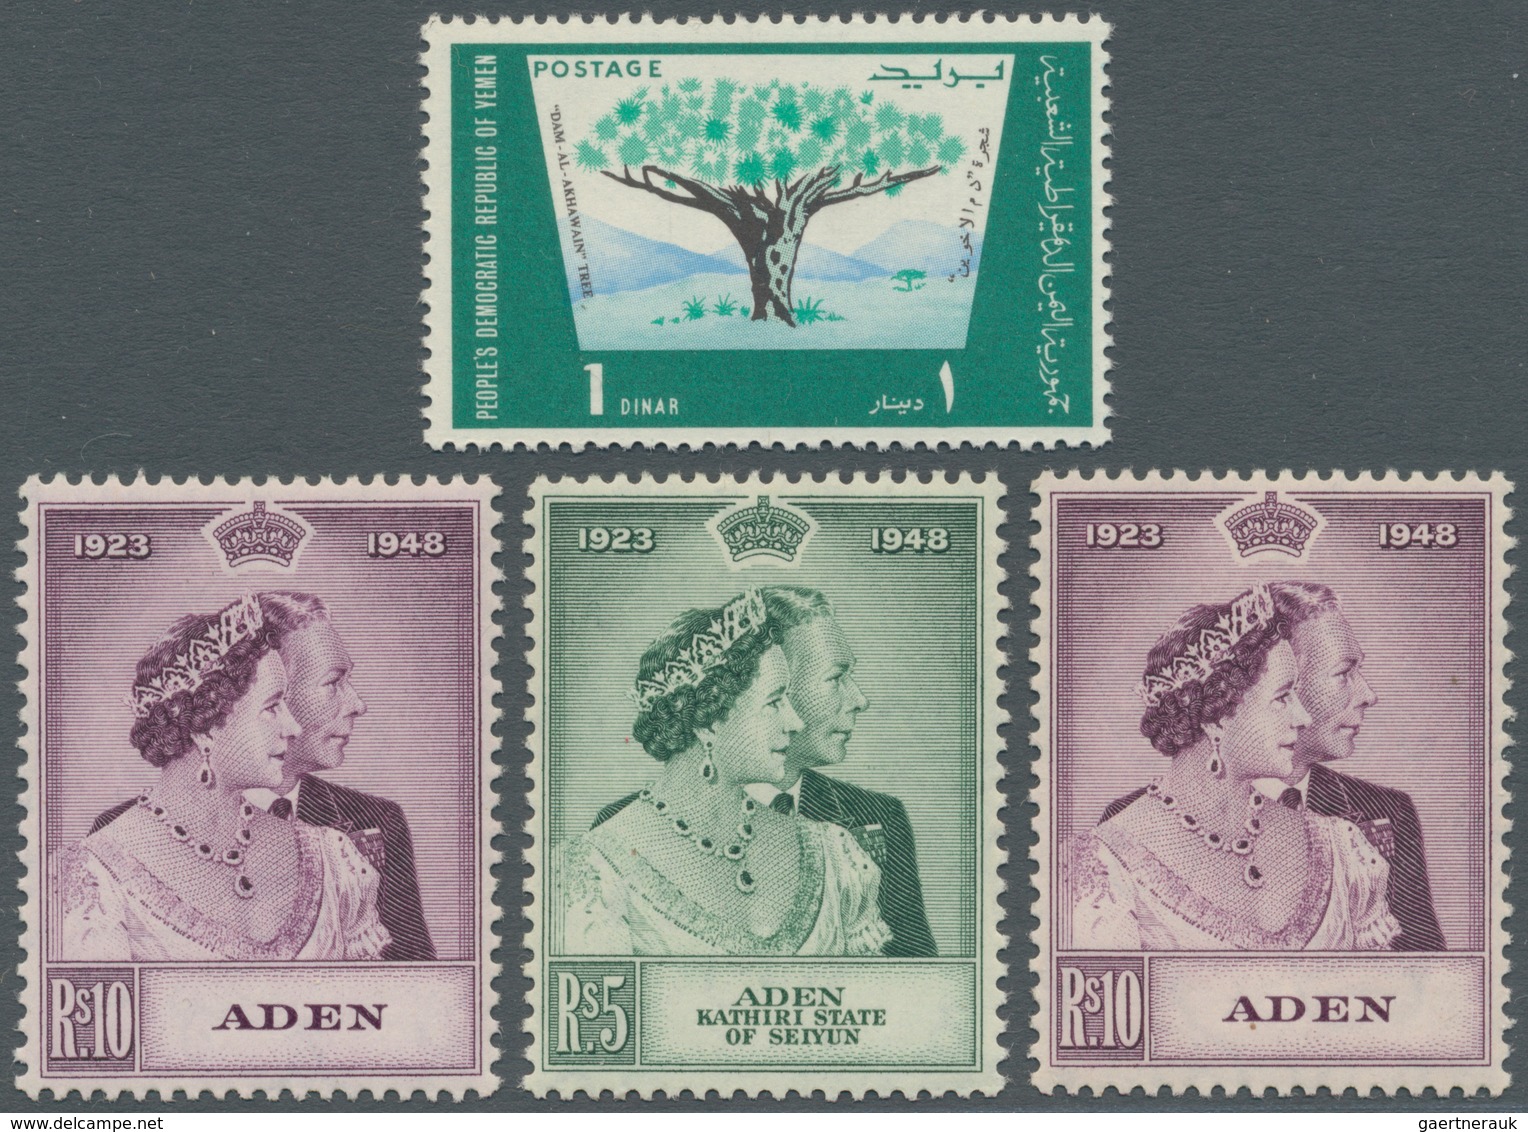 22008 Aden: 1948/1970 (ca.), Accumulation In Box Incl. Kathiri State Of Seiyun, Mahra State, Qu'aiti State - Yemen